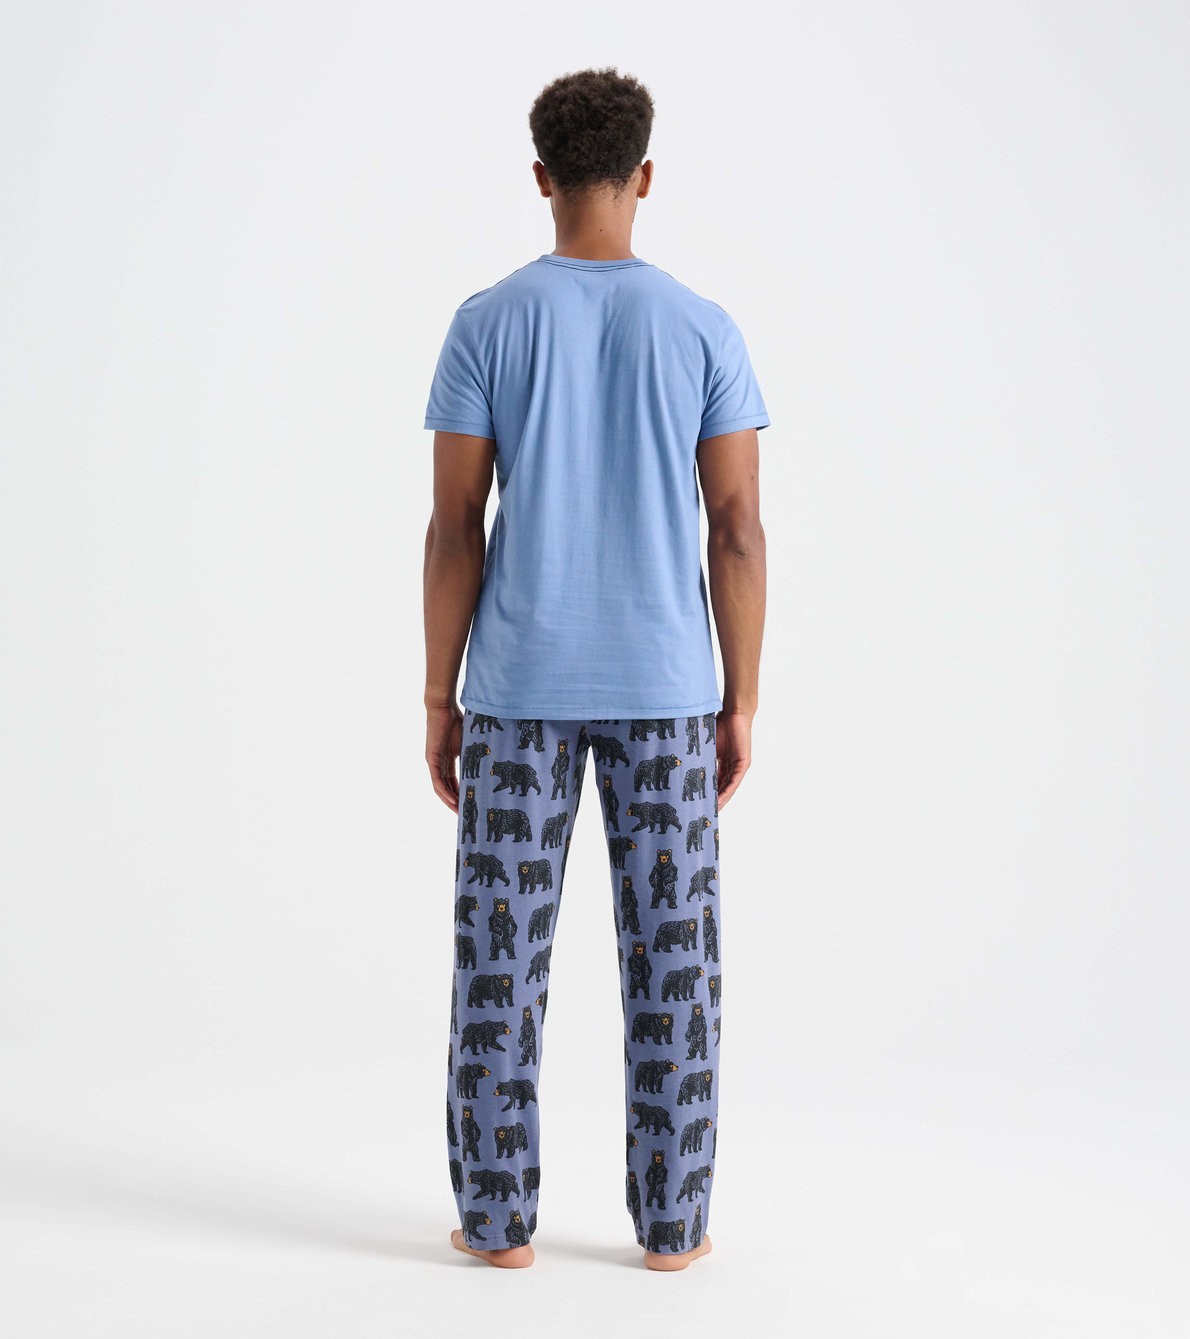 View larger image of Men's Woods Papa Bear T-Shirt and Pants Pajama Separates